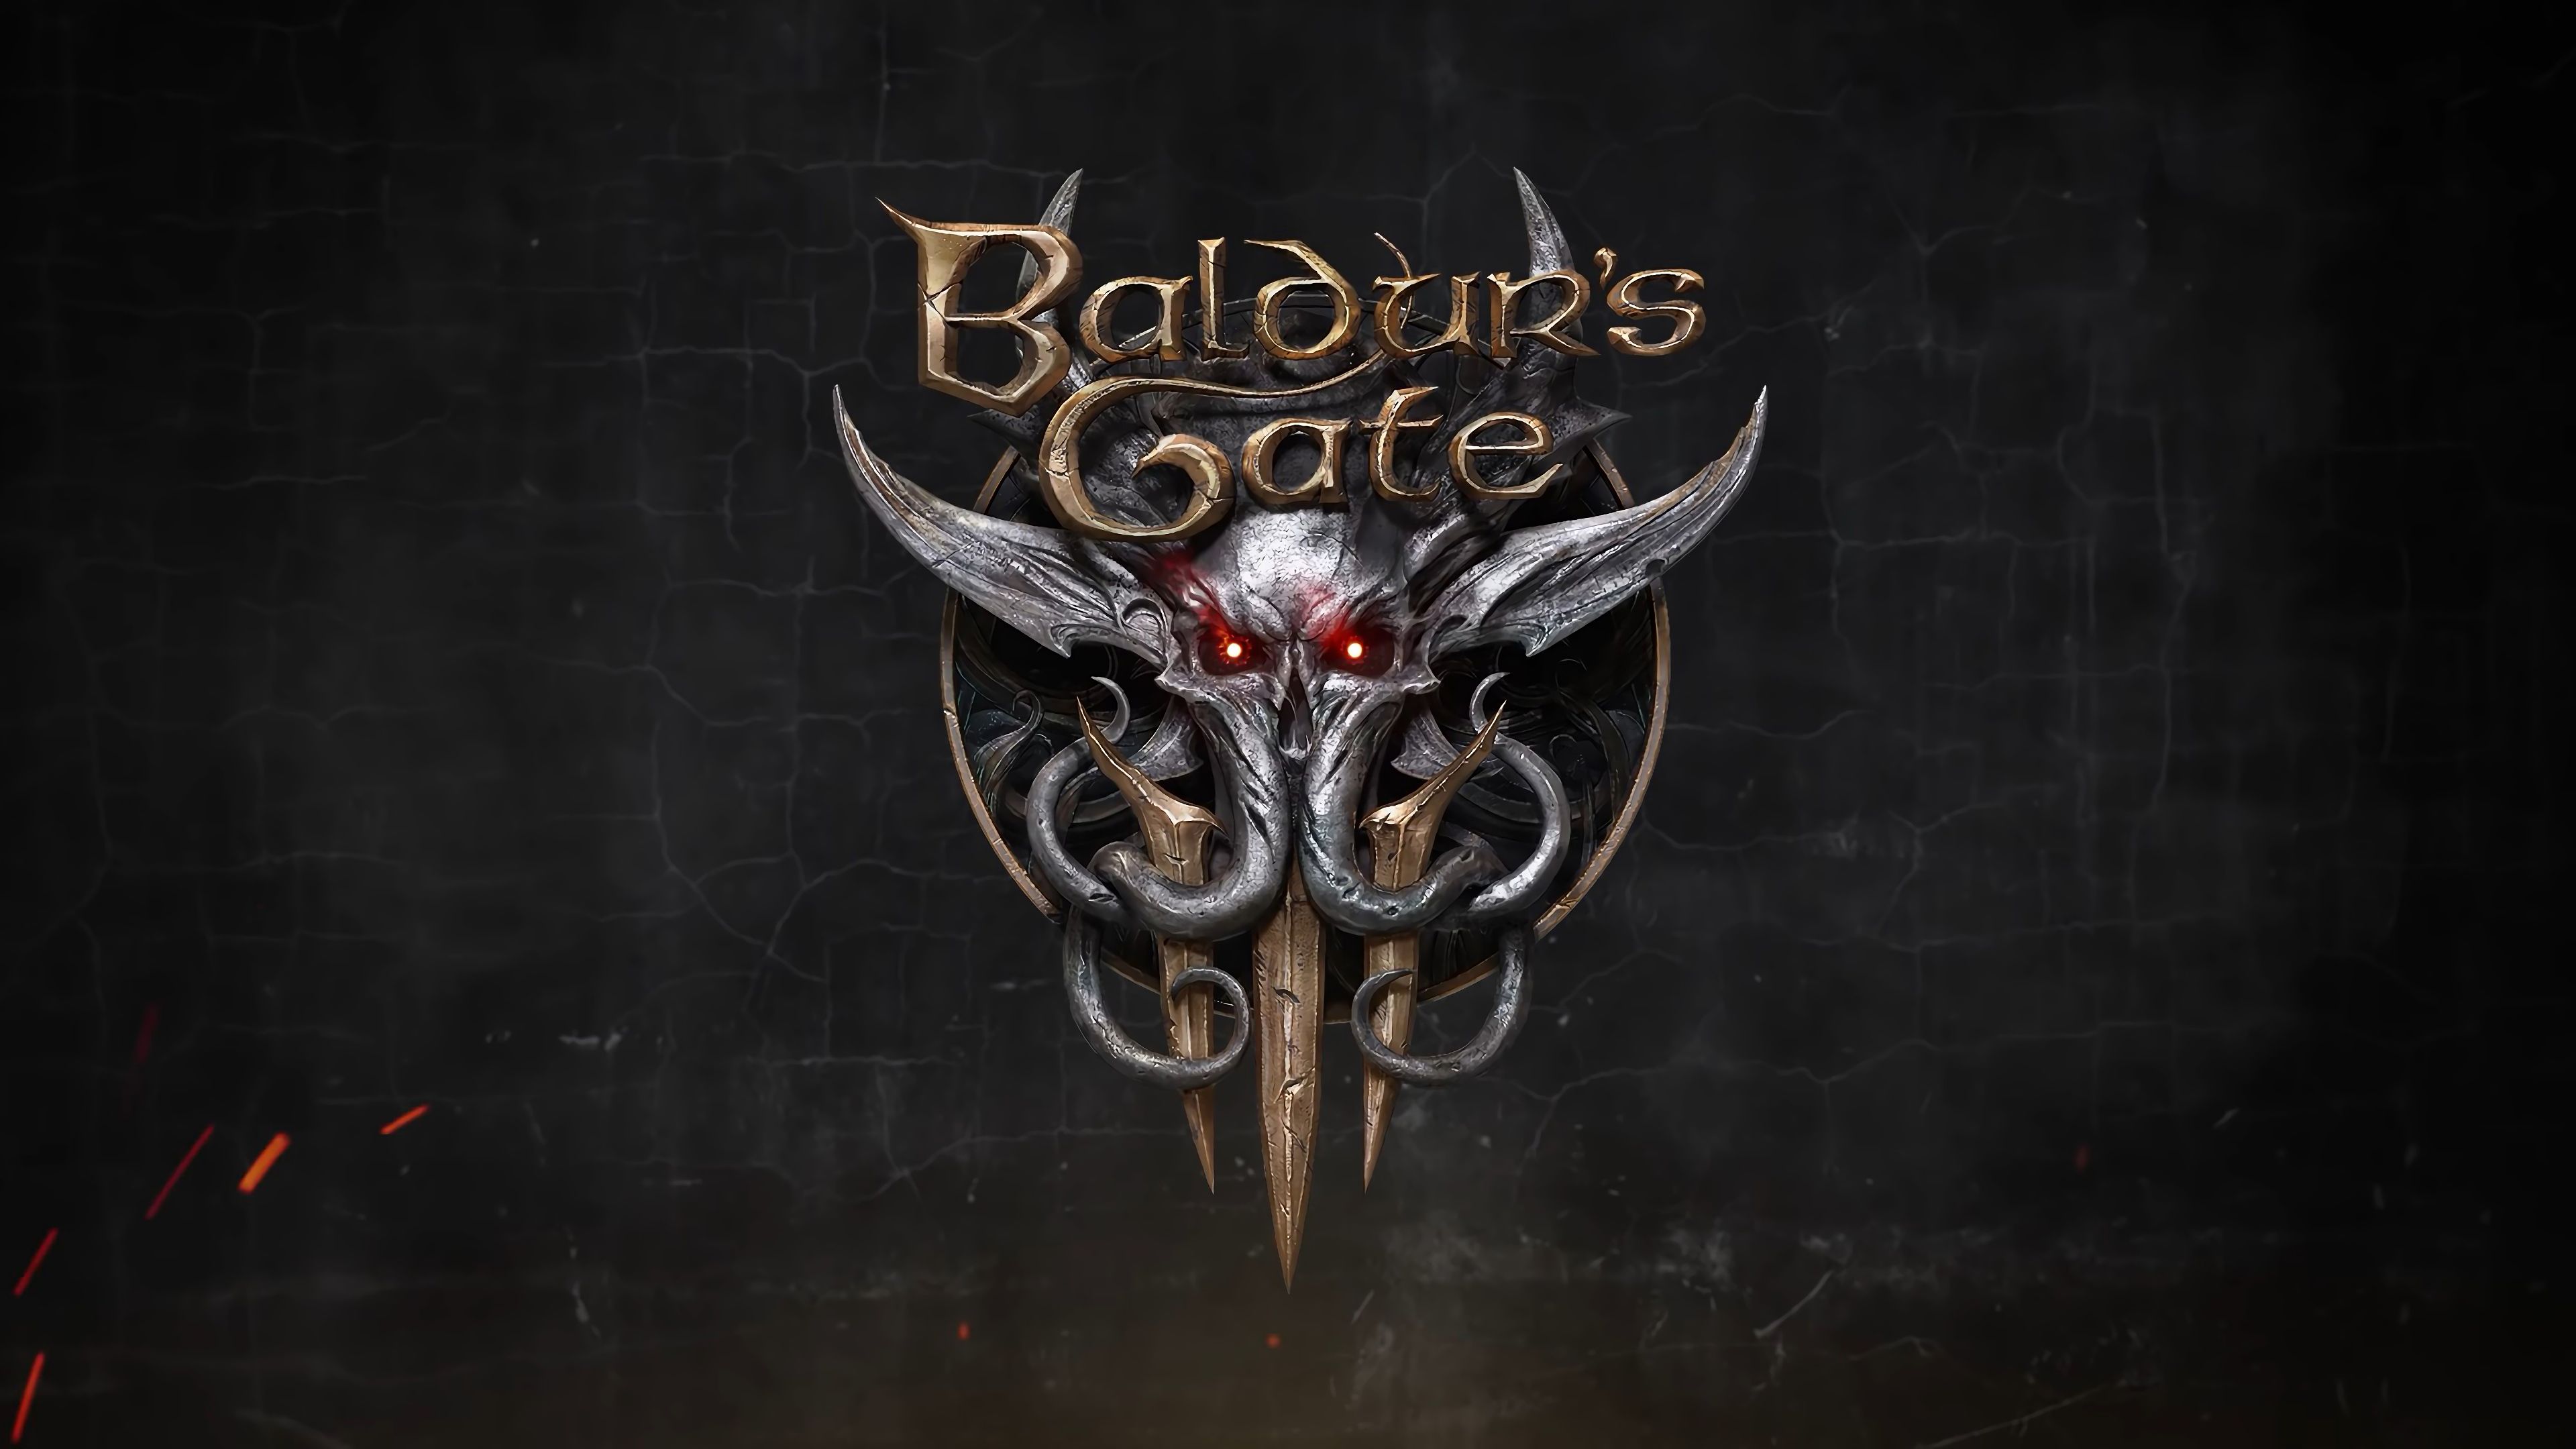 for windows download Baldurs Gate 3